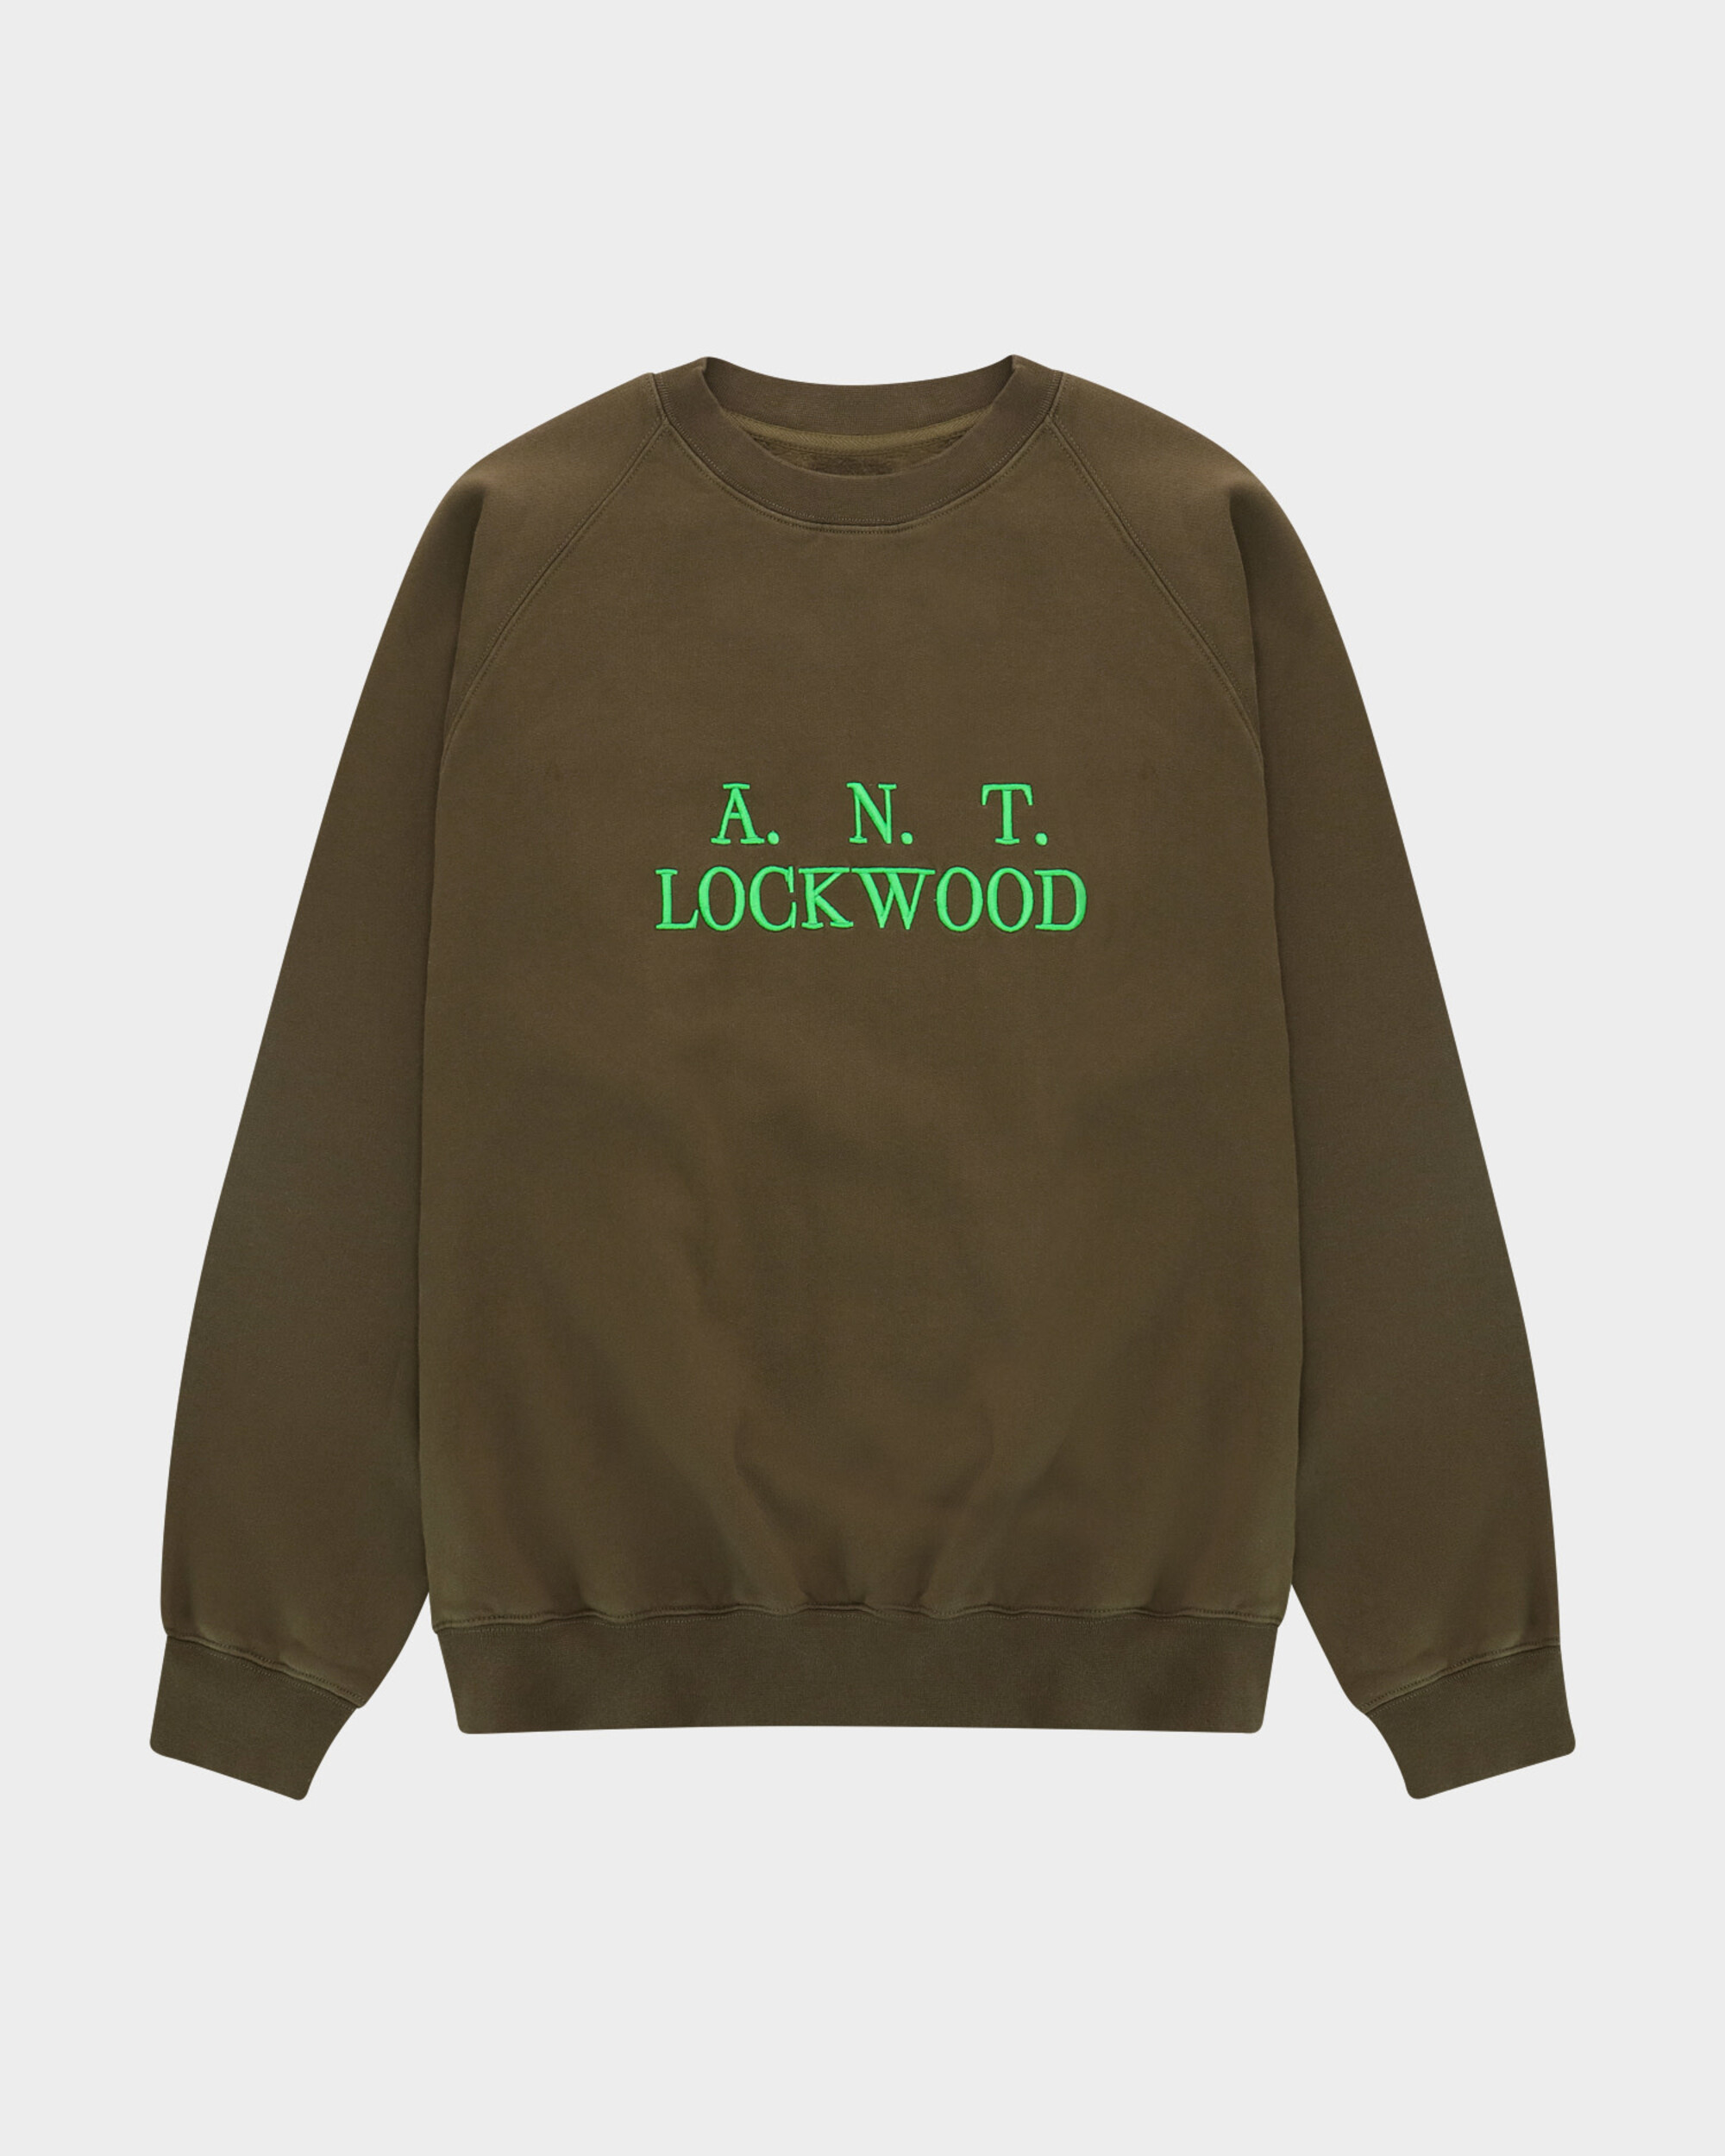 Lockwood Initials Antwerp Crewneck - Army Green